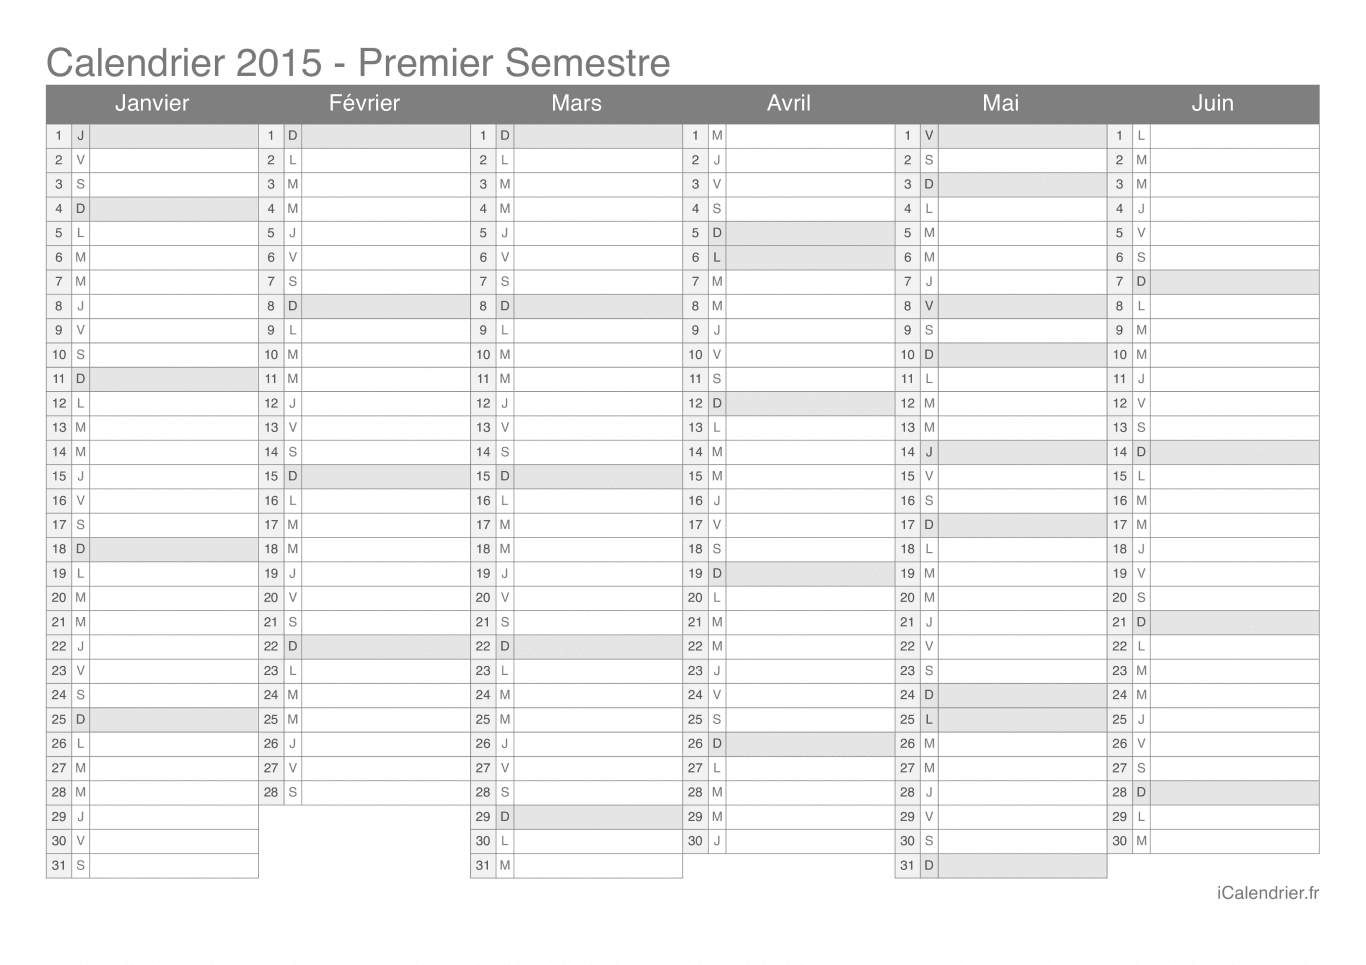 Calendrier par semestre 2015